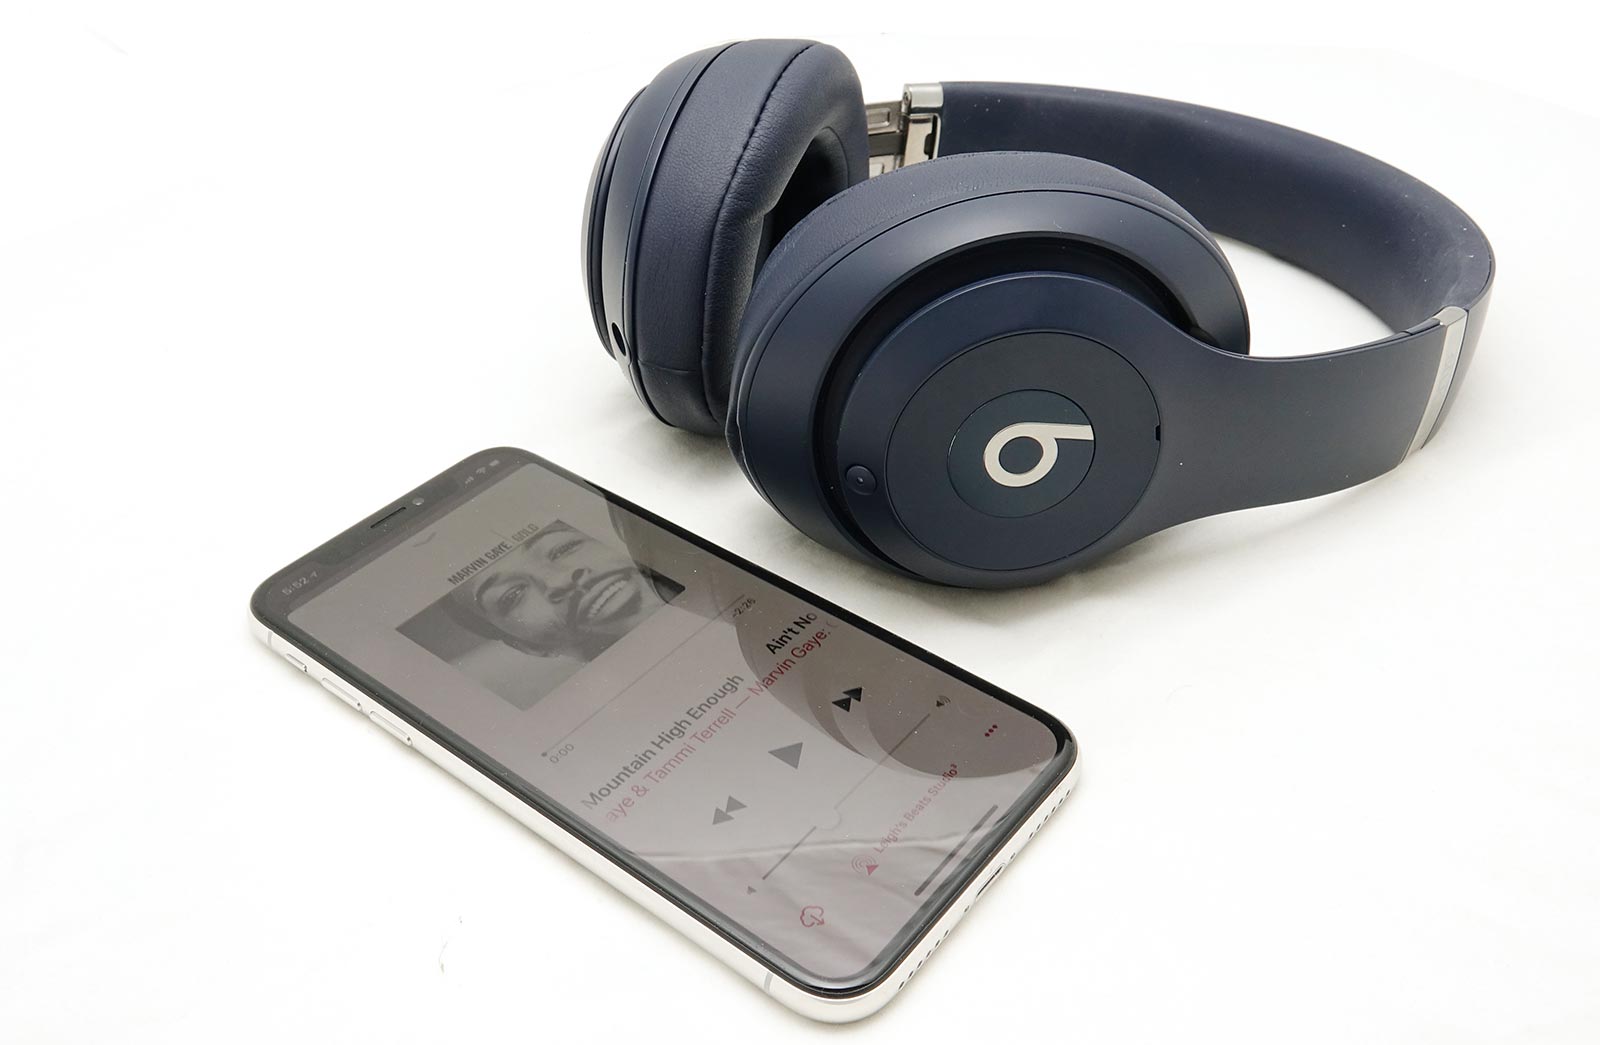 Review: Beats Studio 3 Wireless noise-cancellation headphones – Pickr